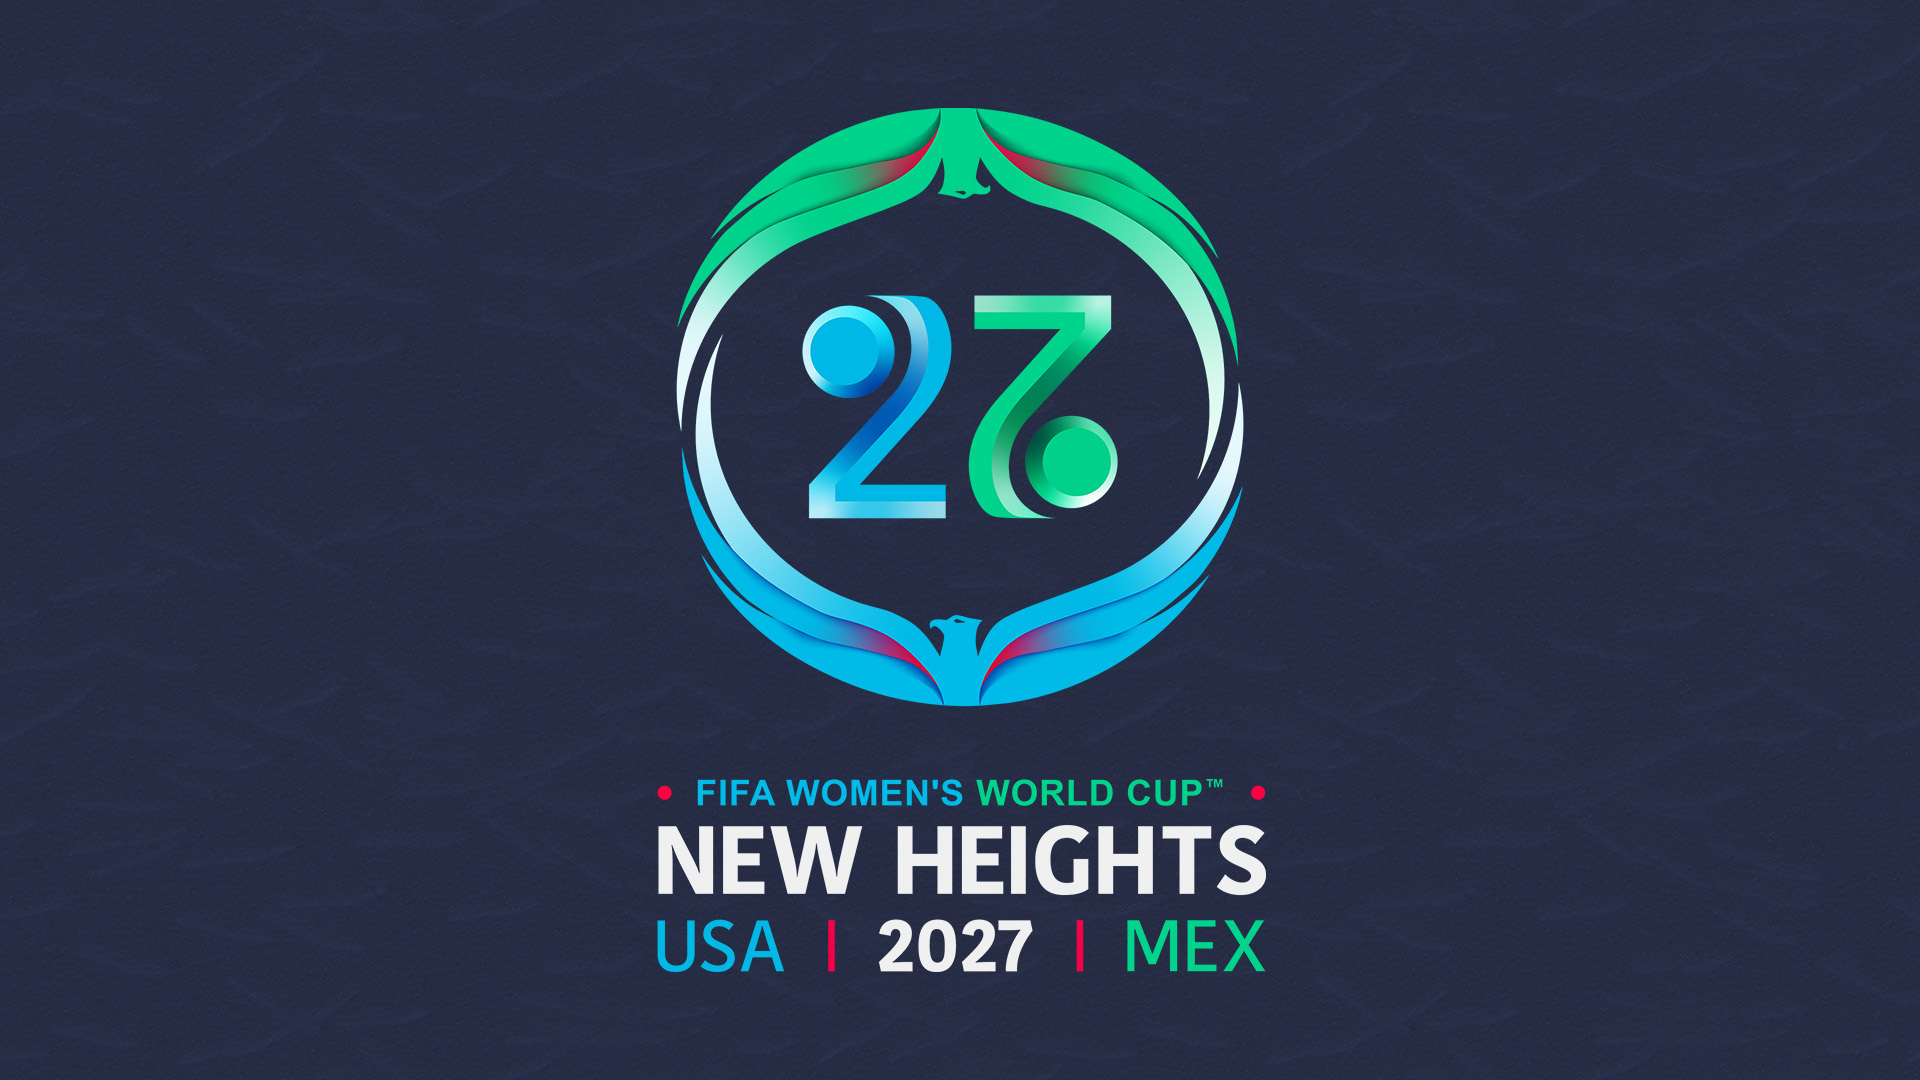 WNT WWC 2027 Bid Logo New Heights USAxMEX 1920x1080 - Estados Unidos y México buscan llevar futbol femenino a "Nuevas Alturas"